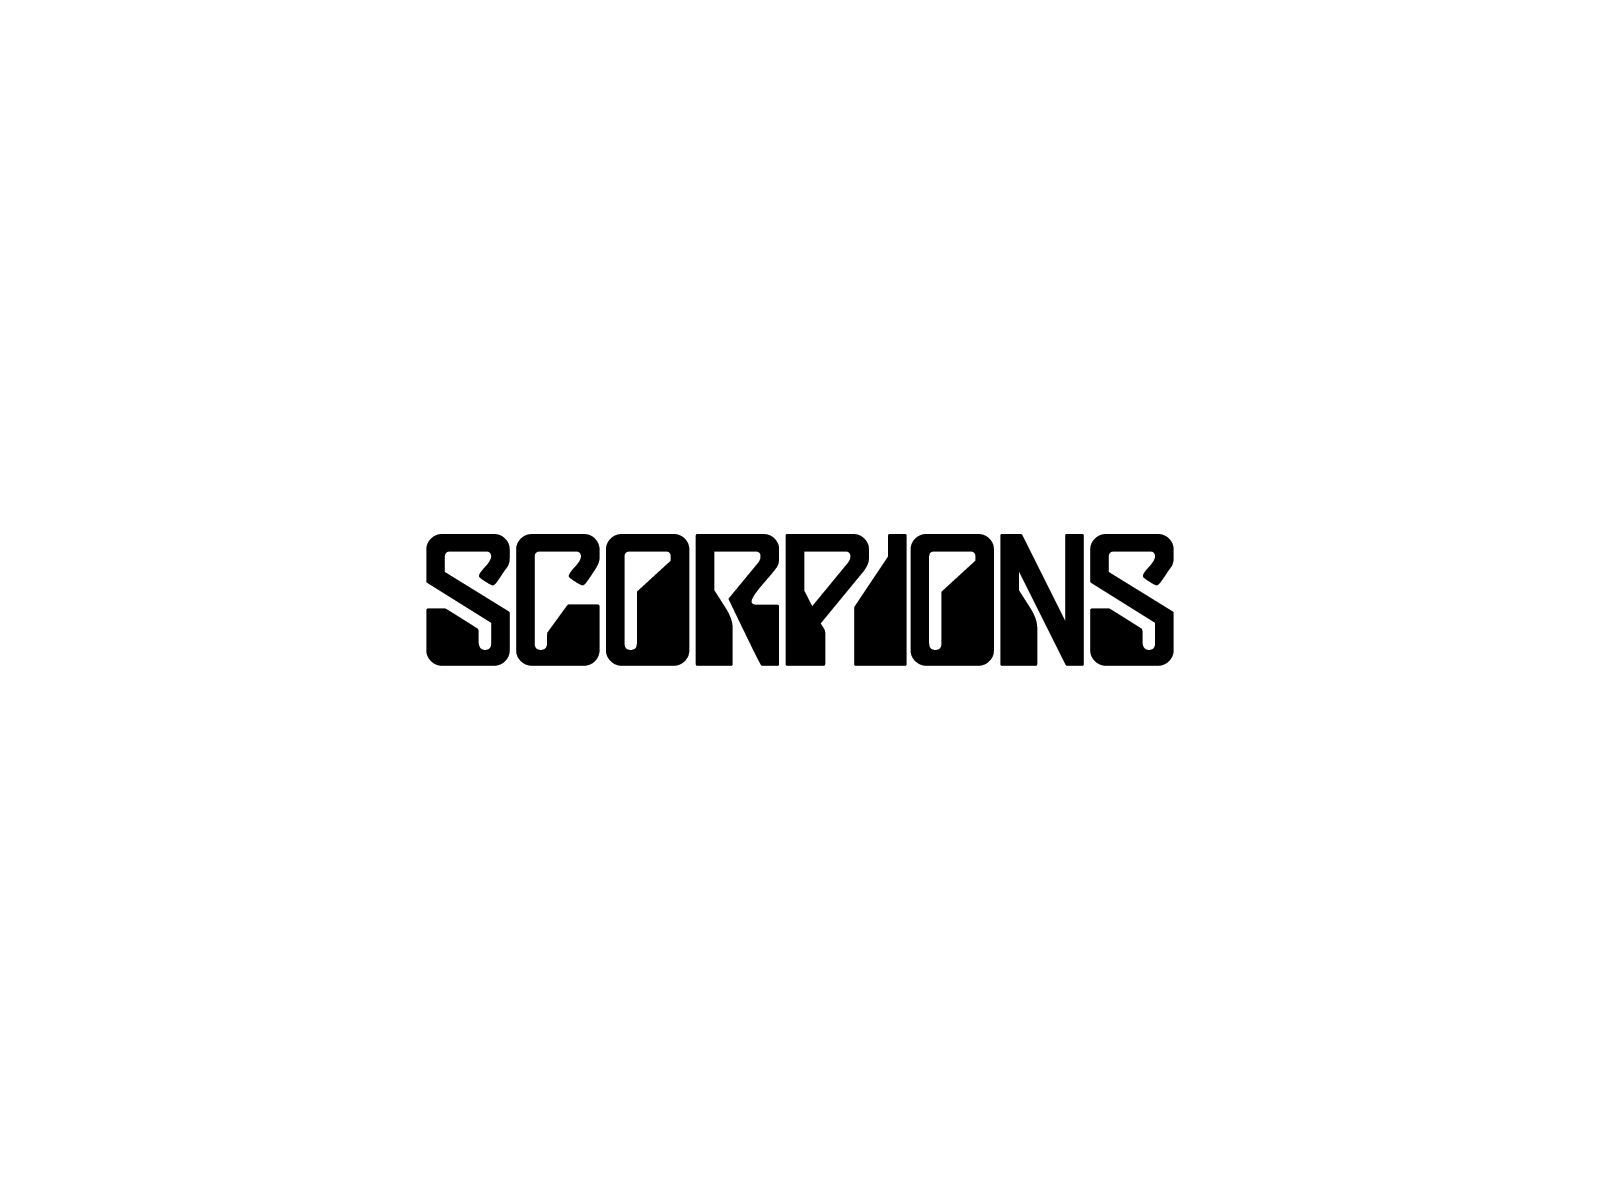 Scorpions logo and wallpaper | Band logos - Rock band logos, metal ...